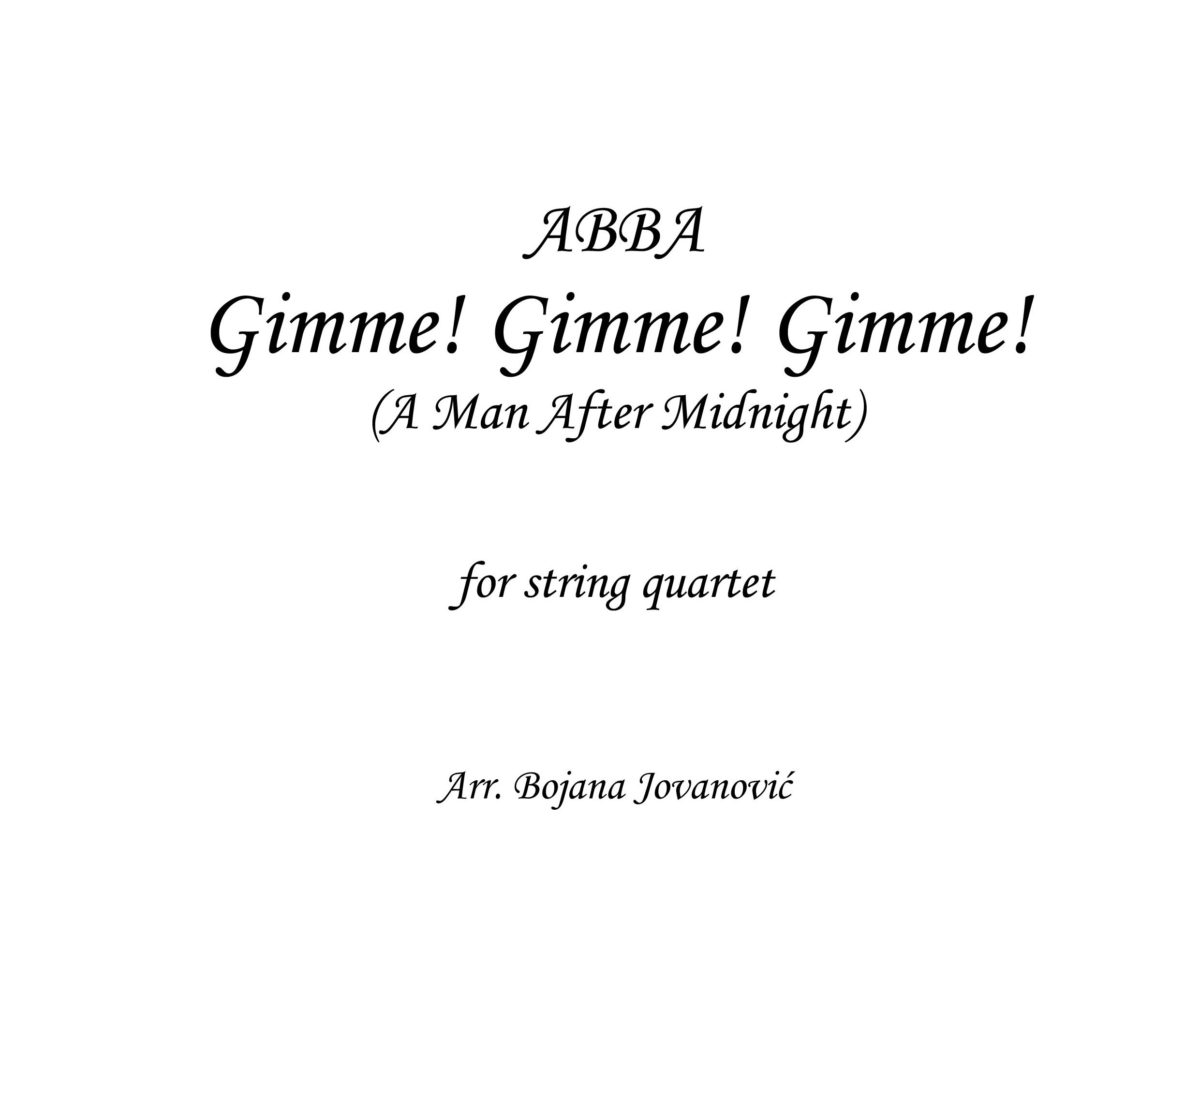 Gimme Gimme Gimme (ABBA) - Sheet Music